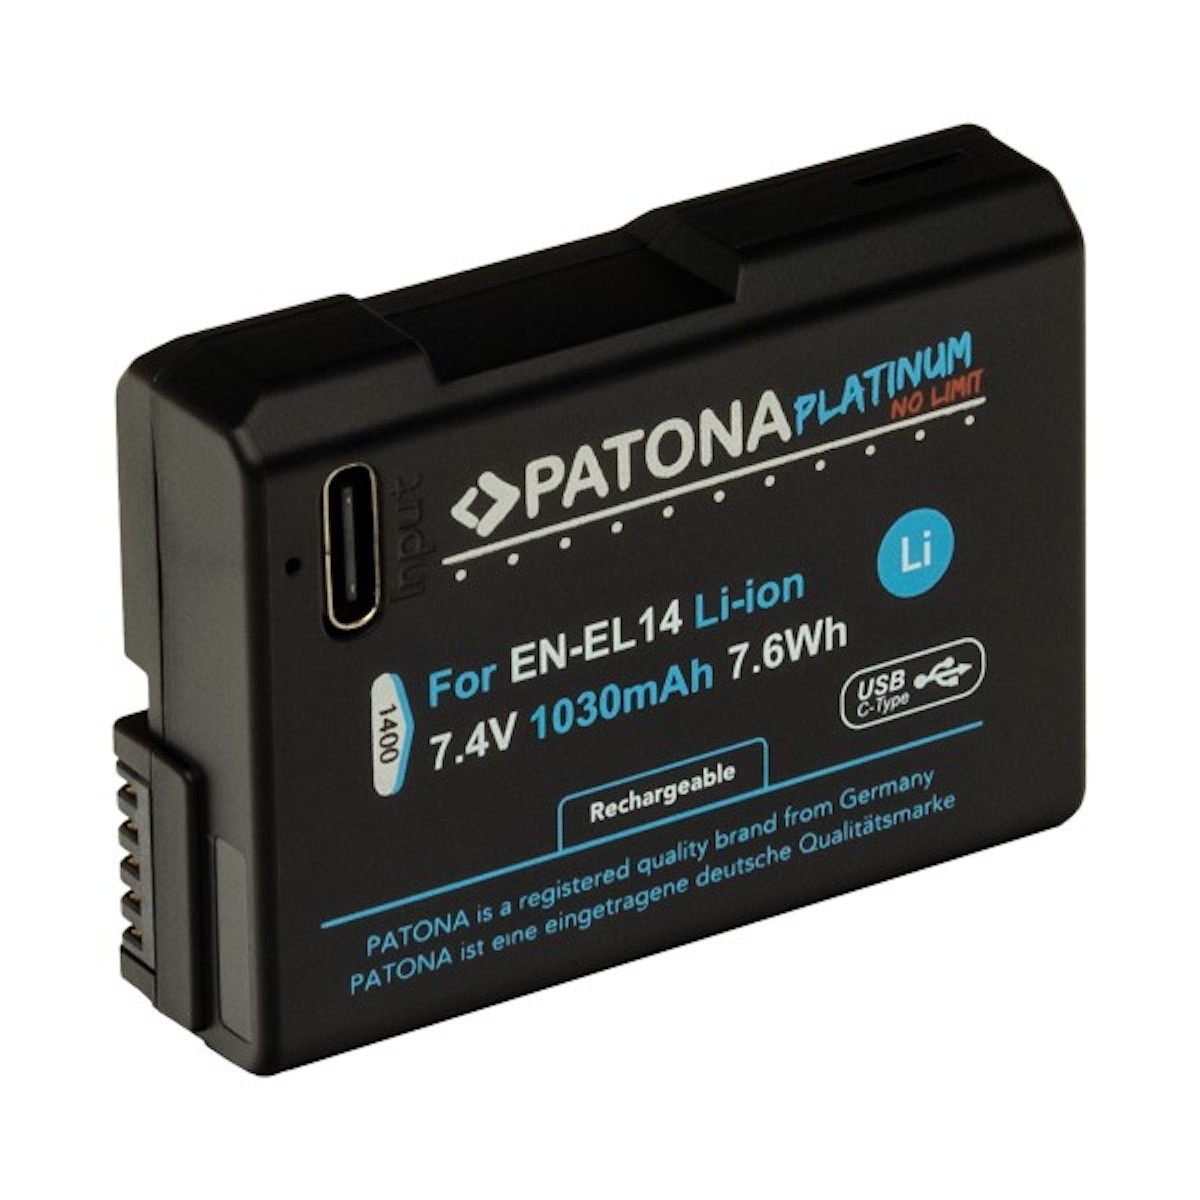 Patona Platinum Akku mit USB-C Input f. Nikon EN-EL14